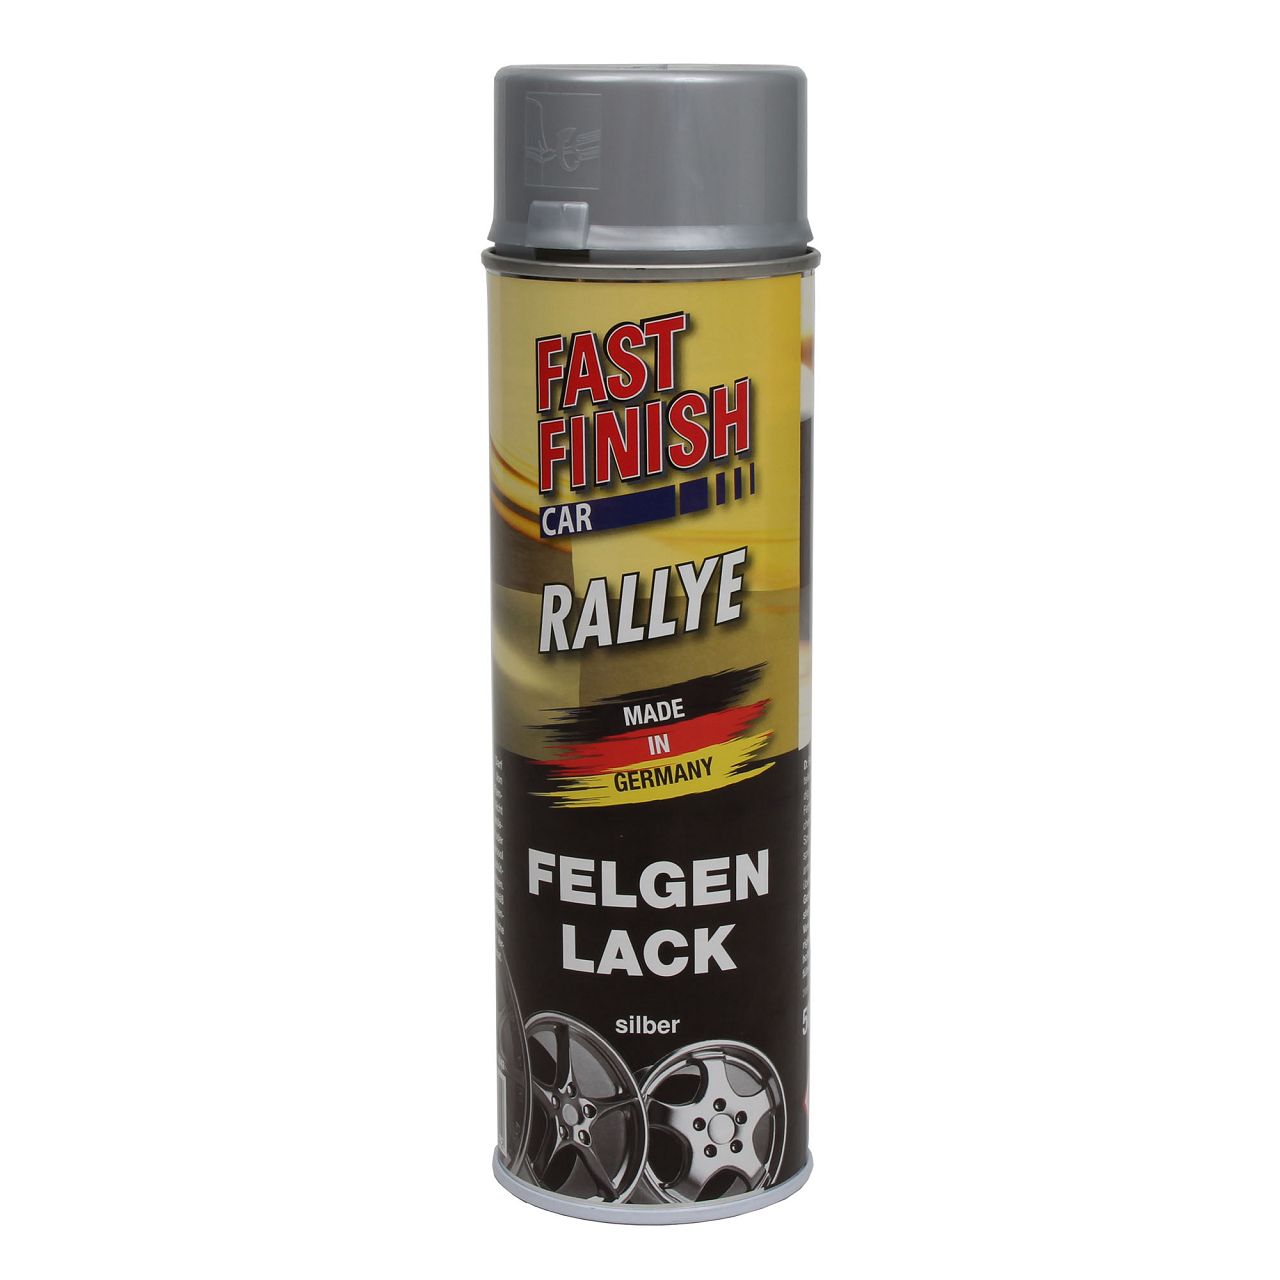 3x 500 ml FAST FINISH Rallye Felgenlack Felgenfarbe Silber Spraydose 292842